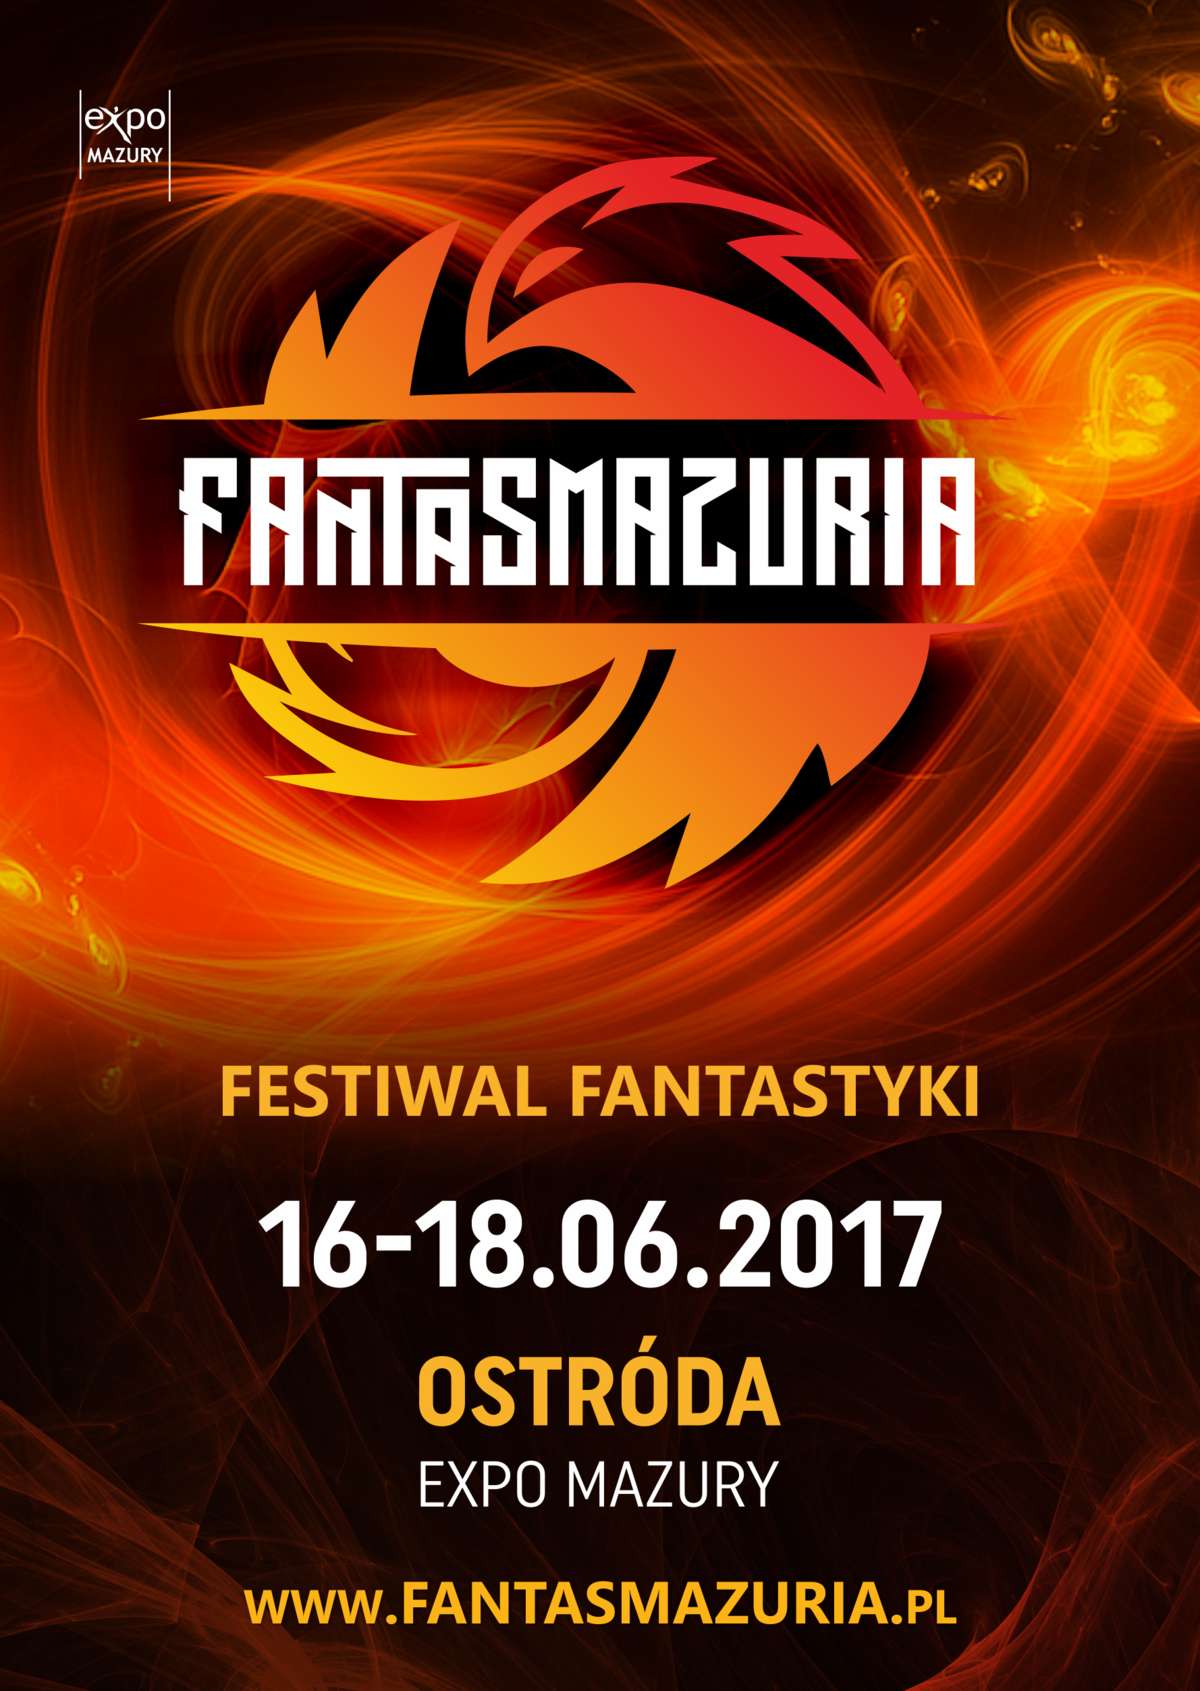 Festiwal fantastyki Fantasmazuria w Ostródzie - full image